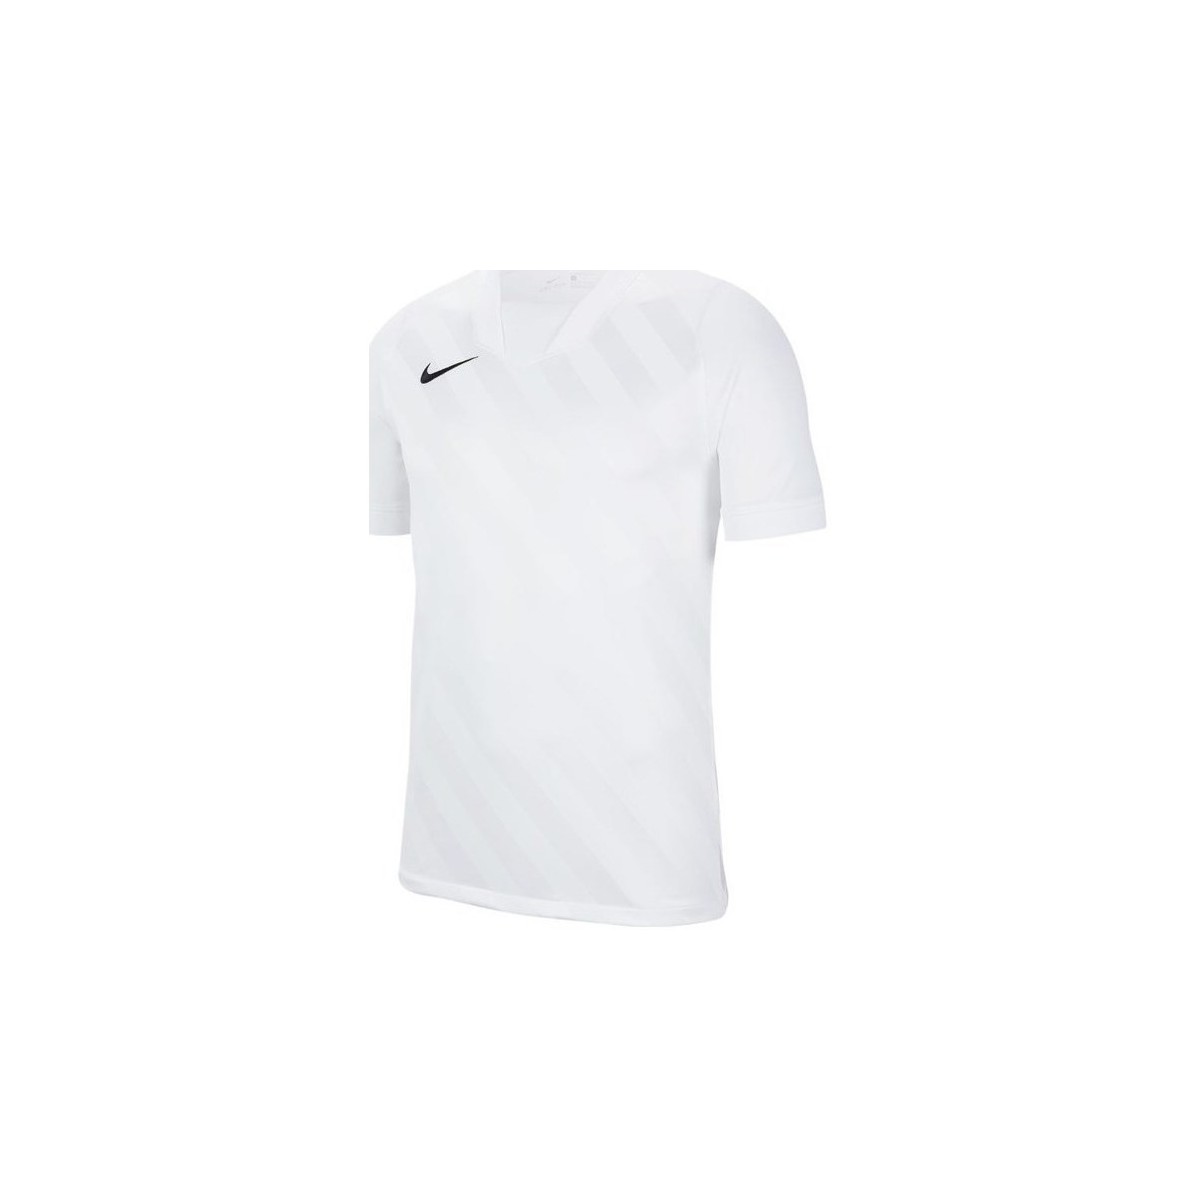 Vêtements Homme T-shirts manches courtes Nike Challenge Iii Blanc